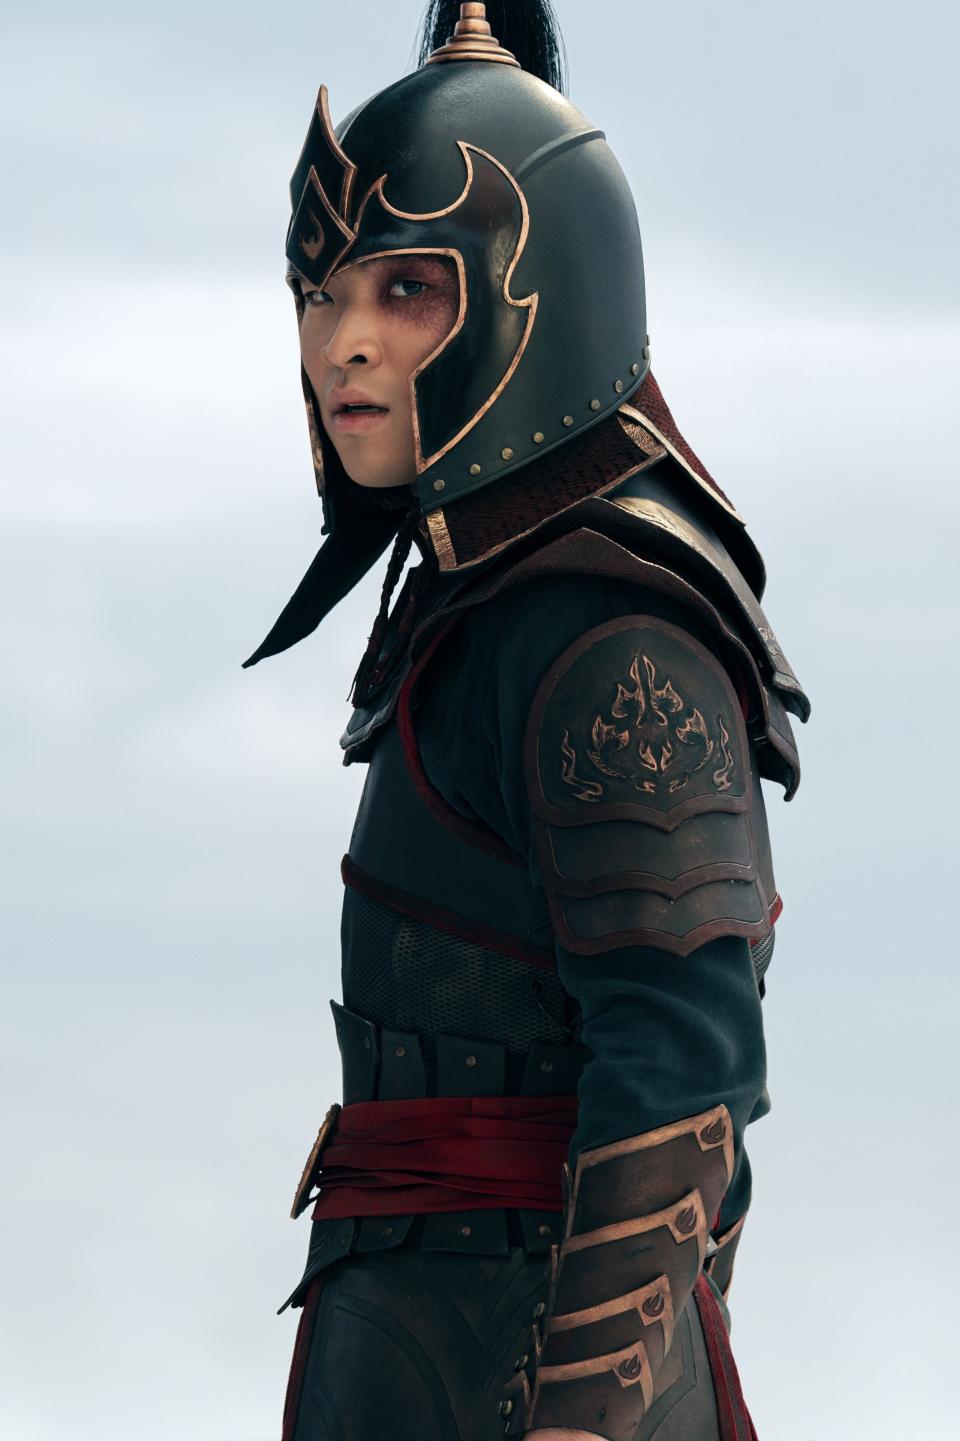 Dallas Liu as Prince Zuko in episode 101 of Avatar: The Last Airbender